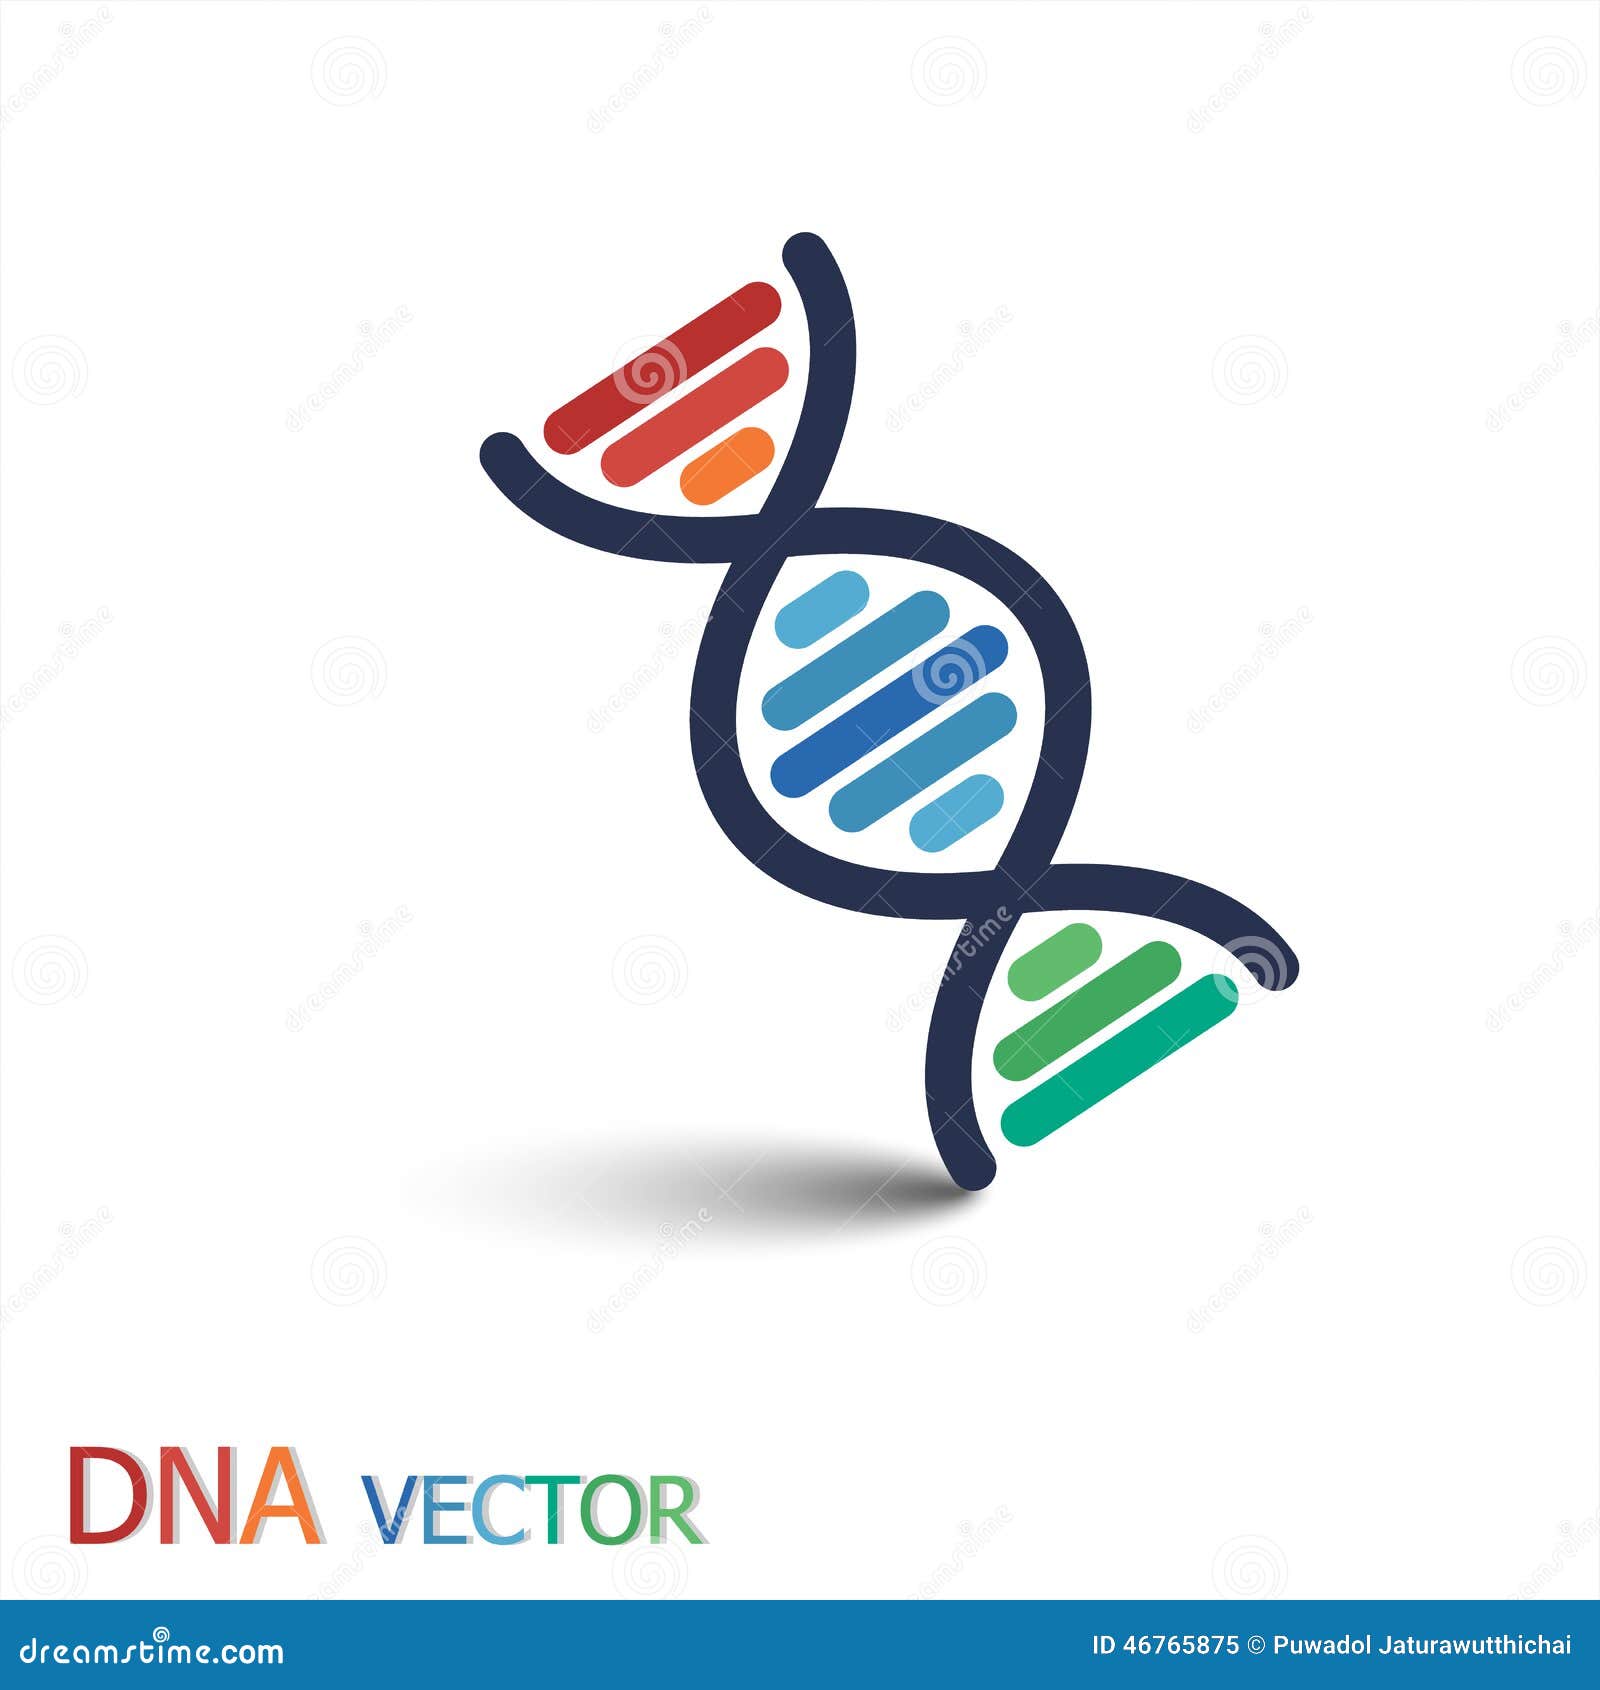 dna ( deoxyribonucleic acid )  ( double strand dna )